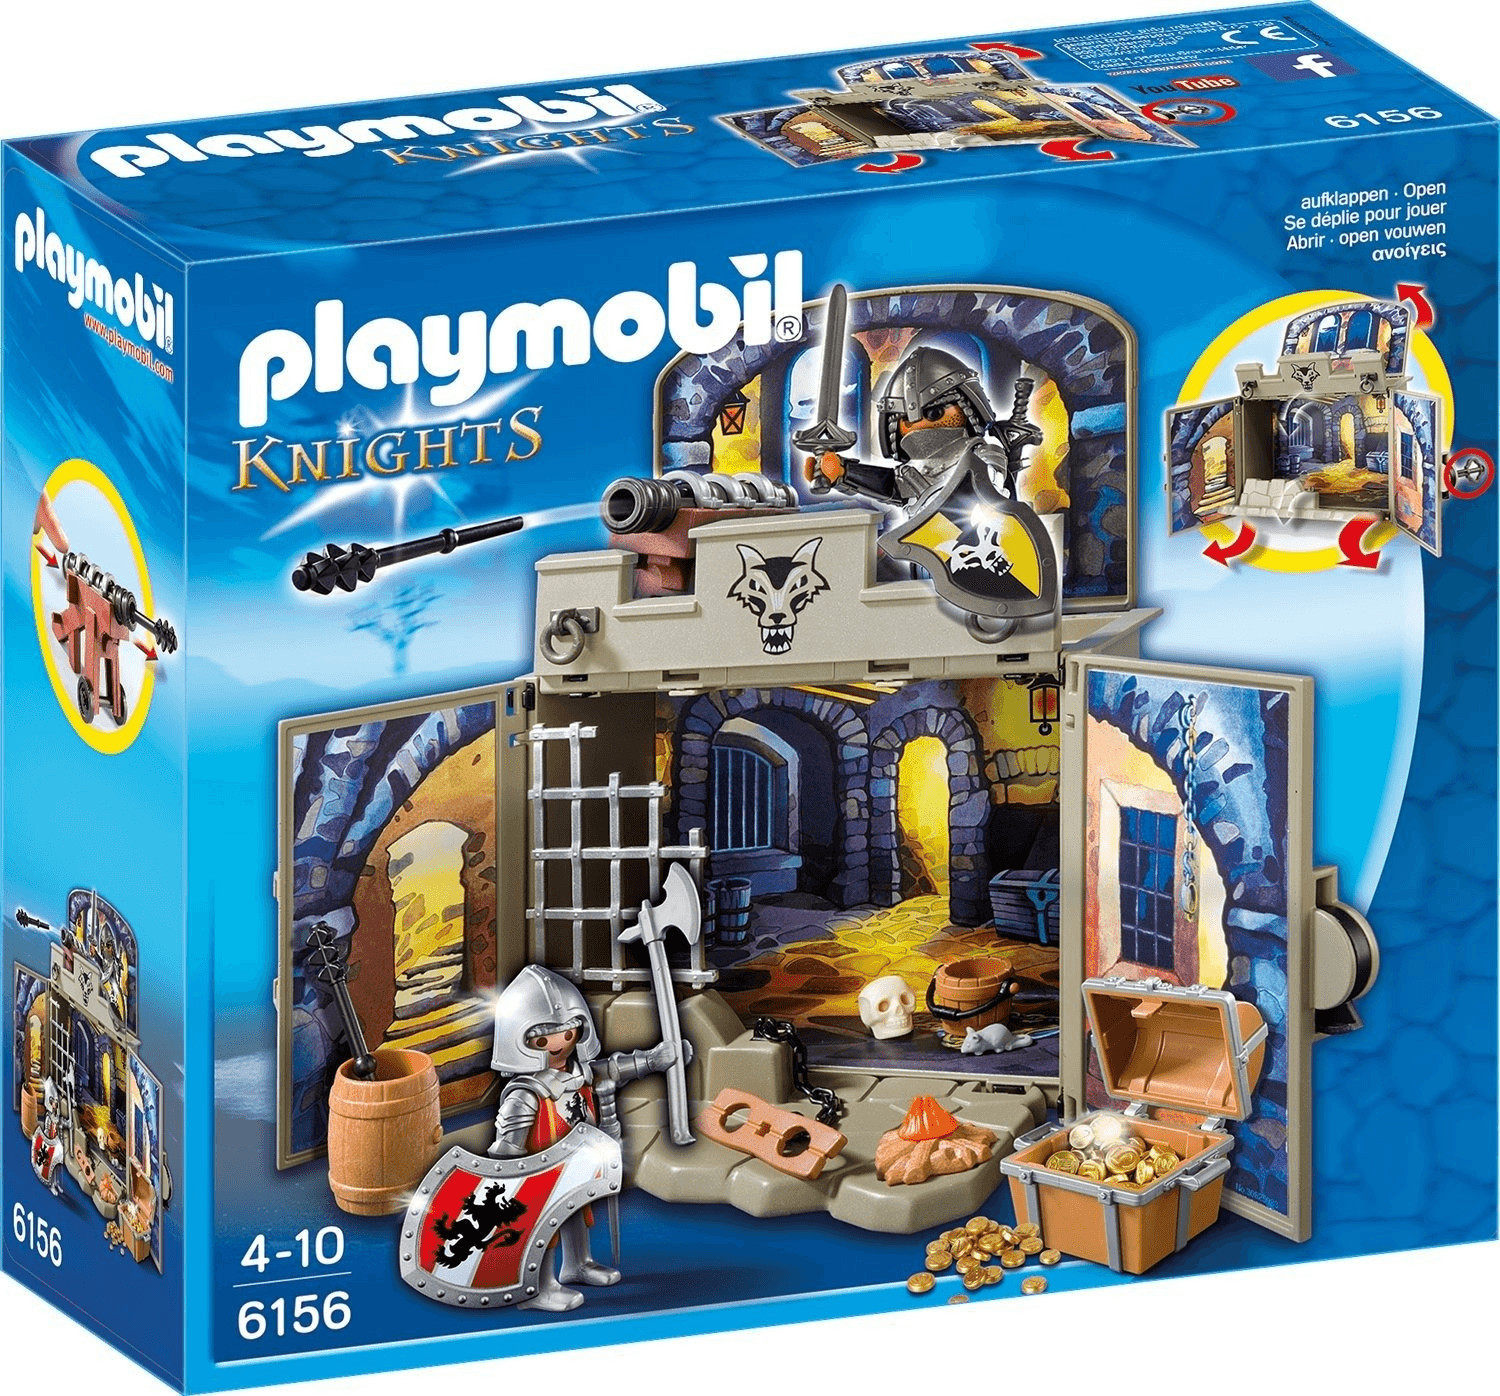 Playmobil Knights - My Secret Treasure Room Play Box (6156)